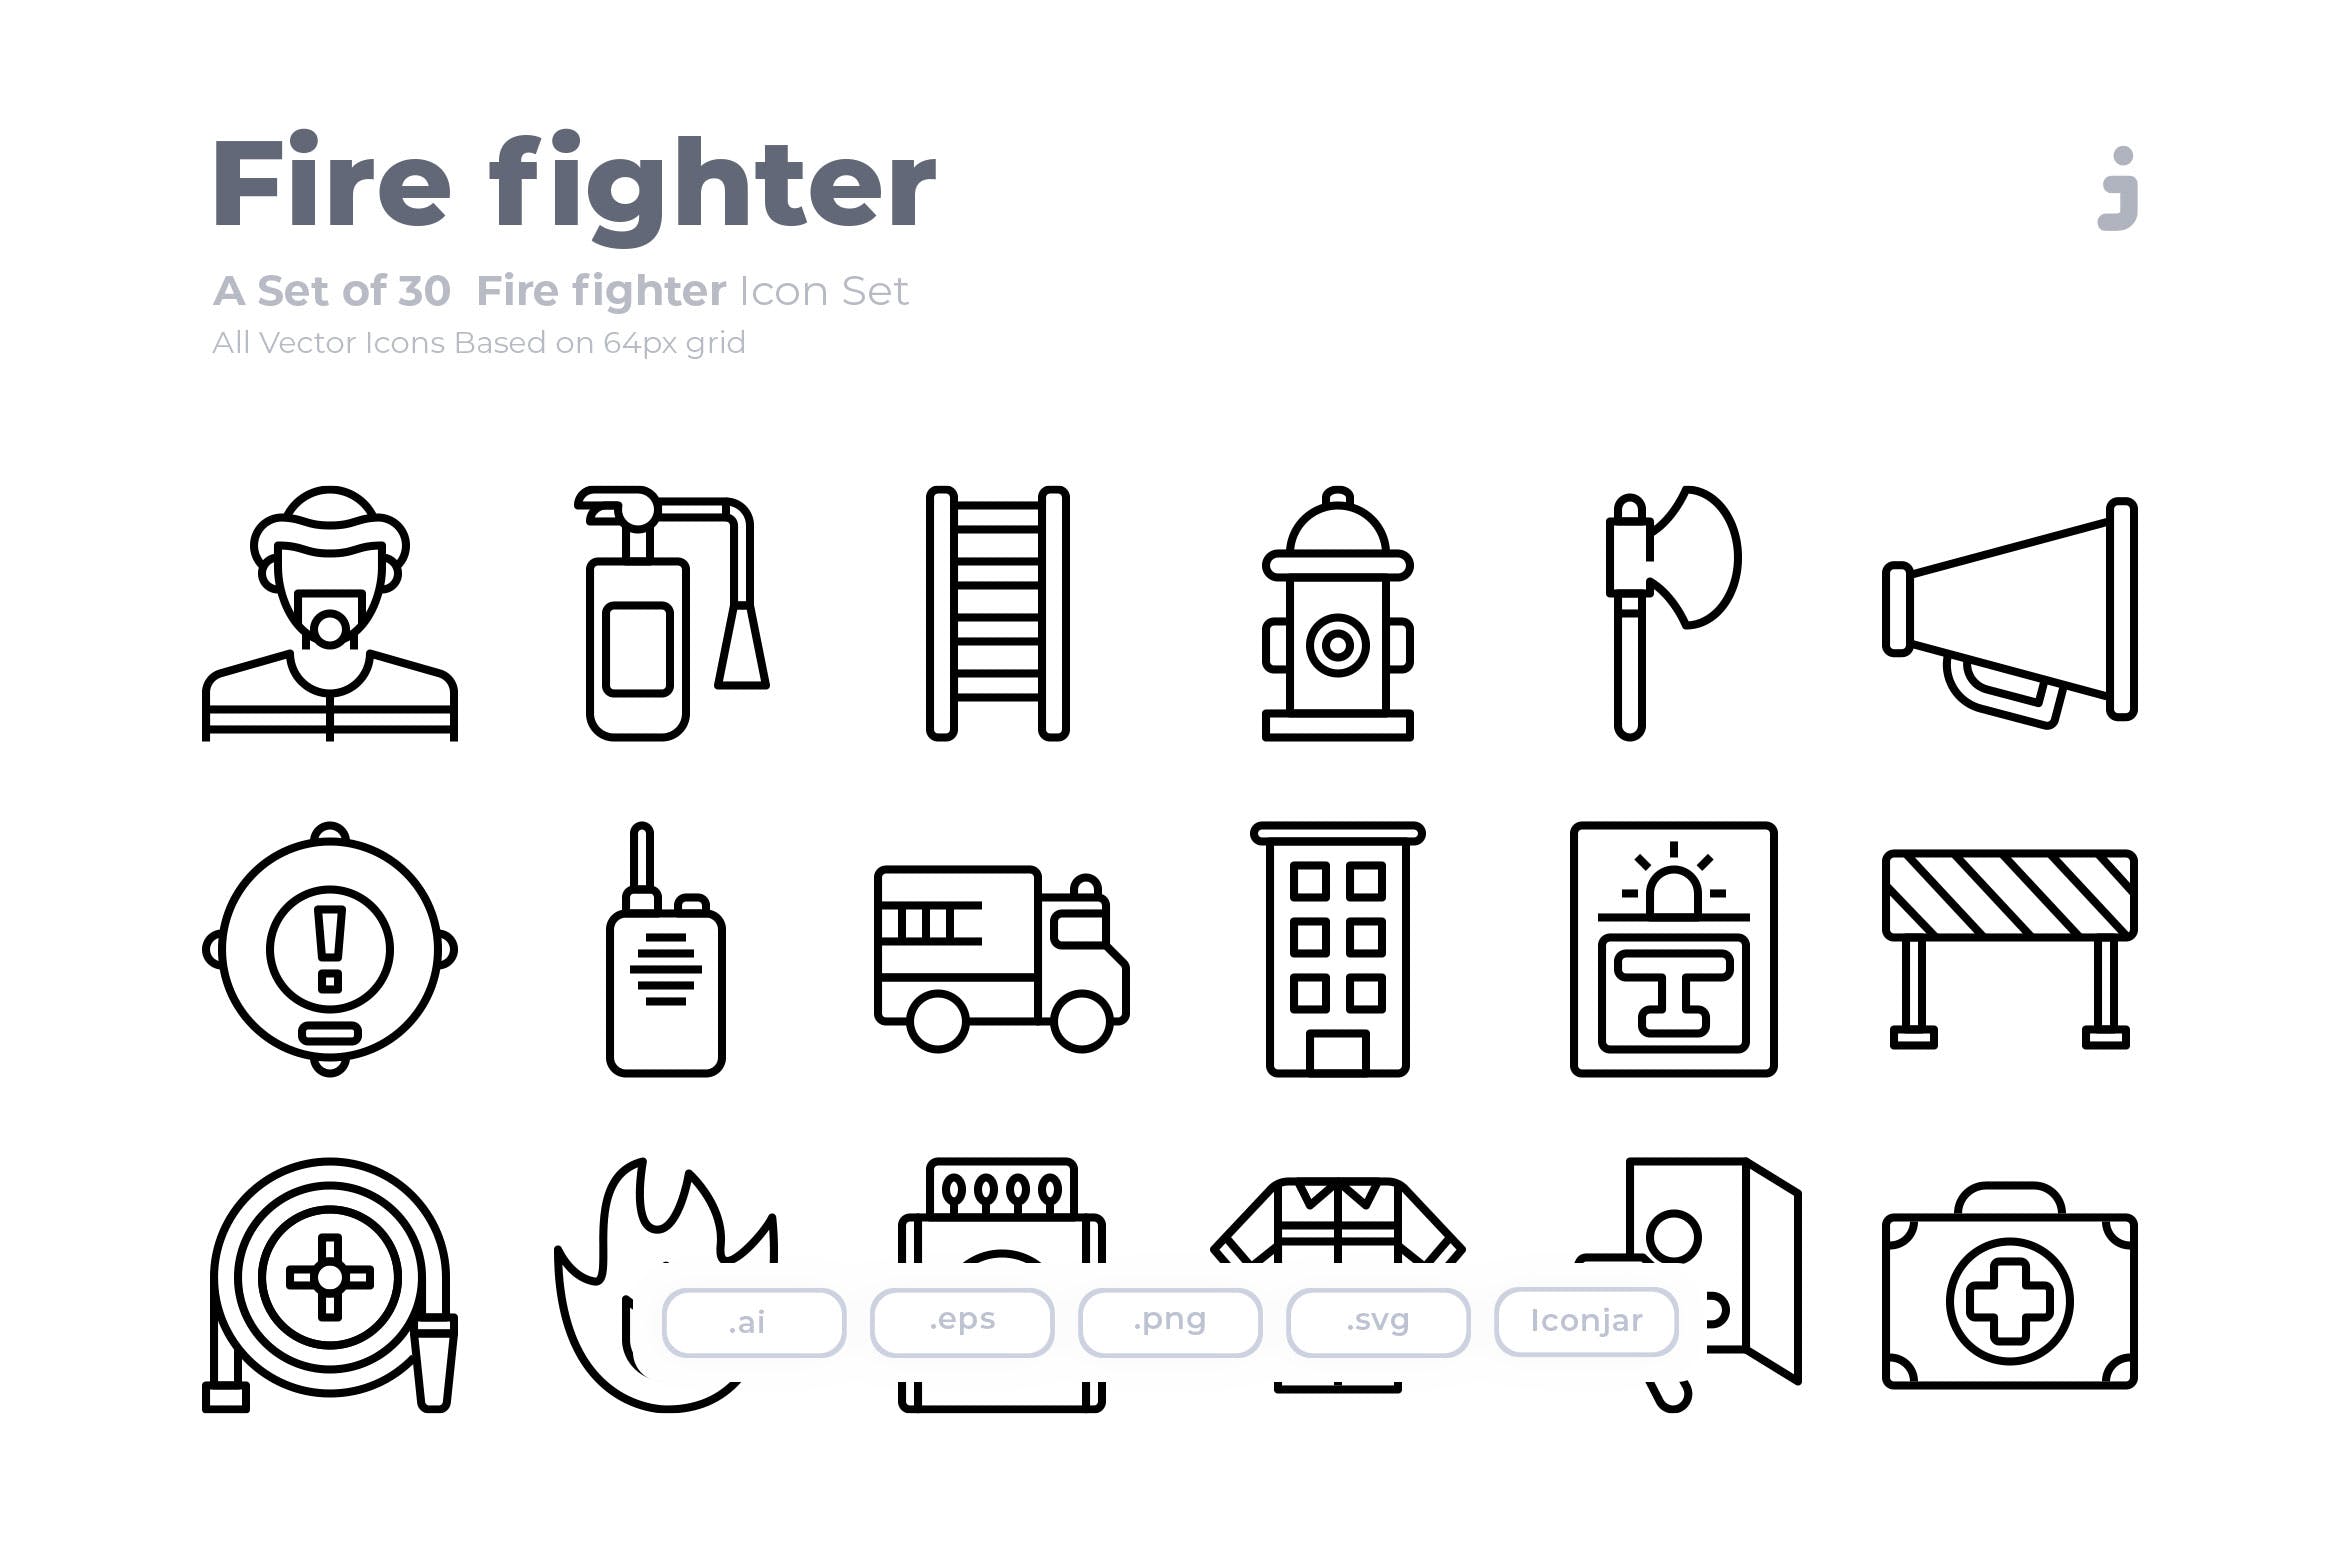 30消防队员元素线性图标源文件下载30 Fire fighter Icons Outliner插图